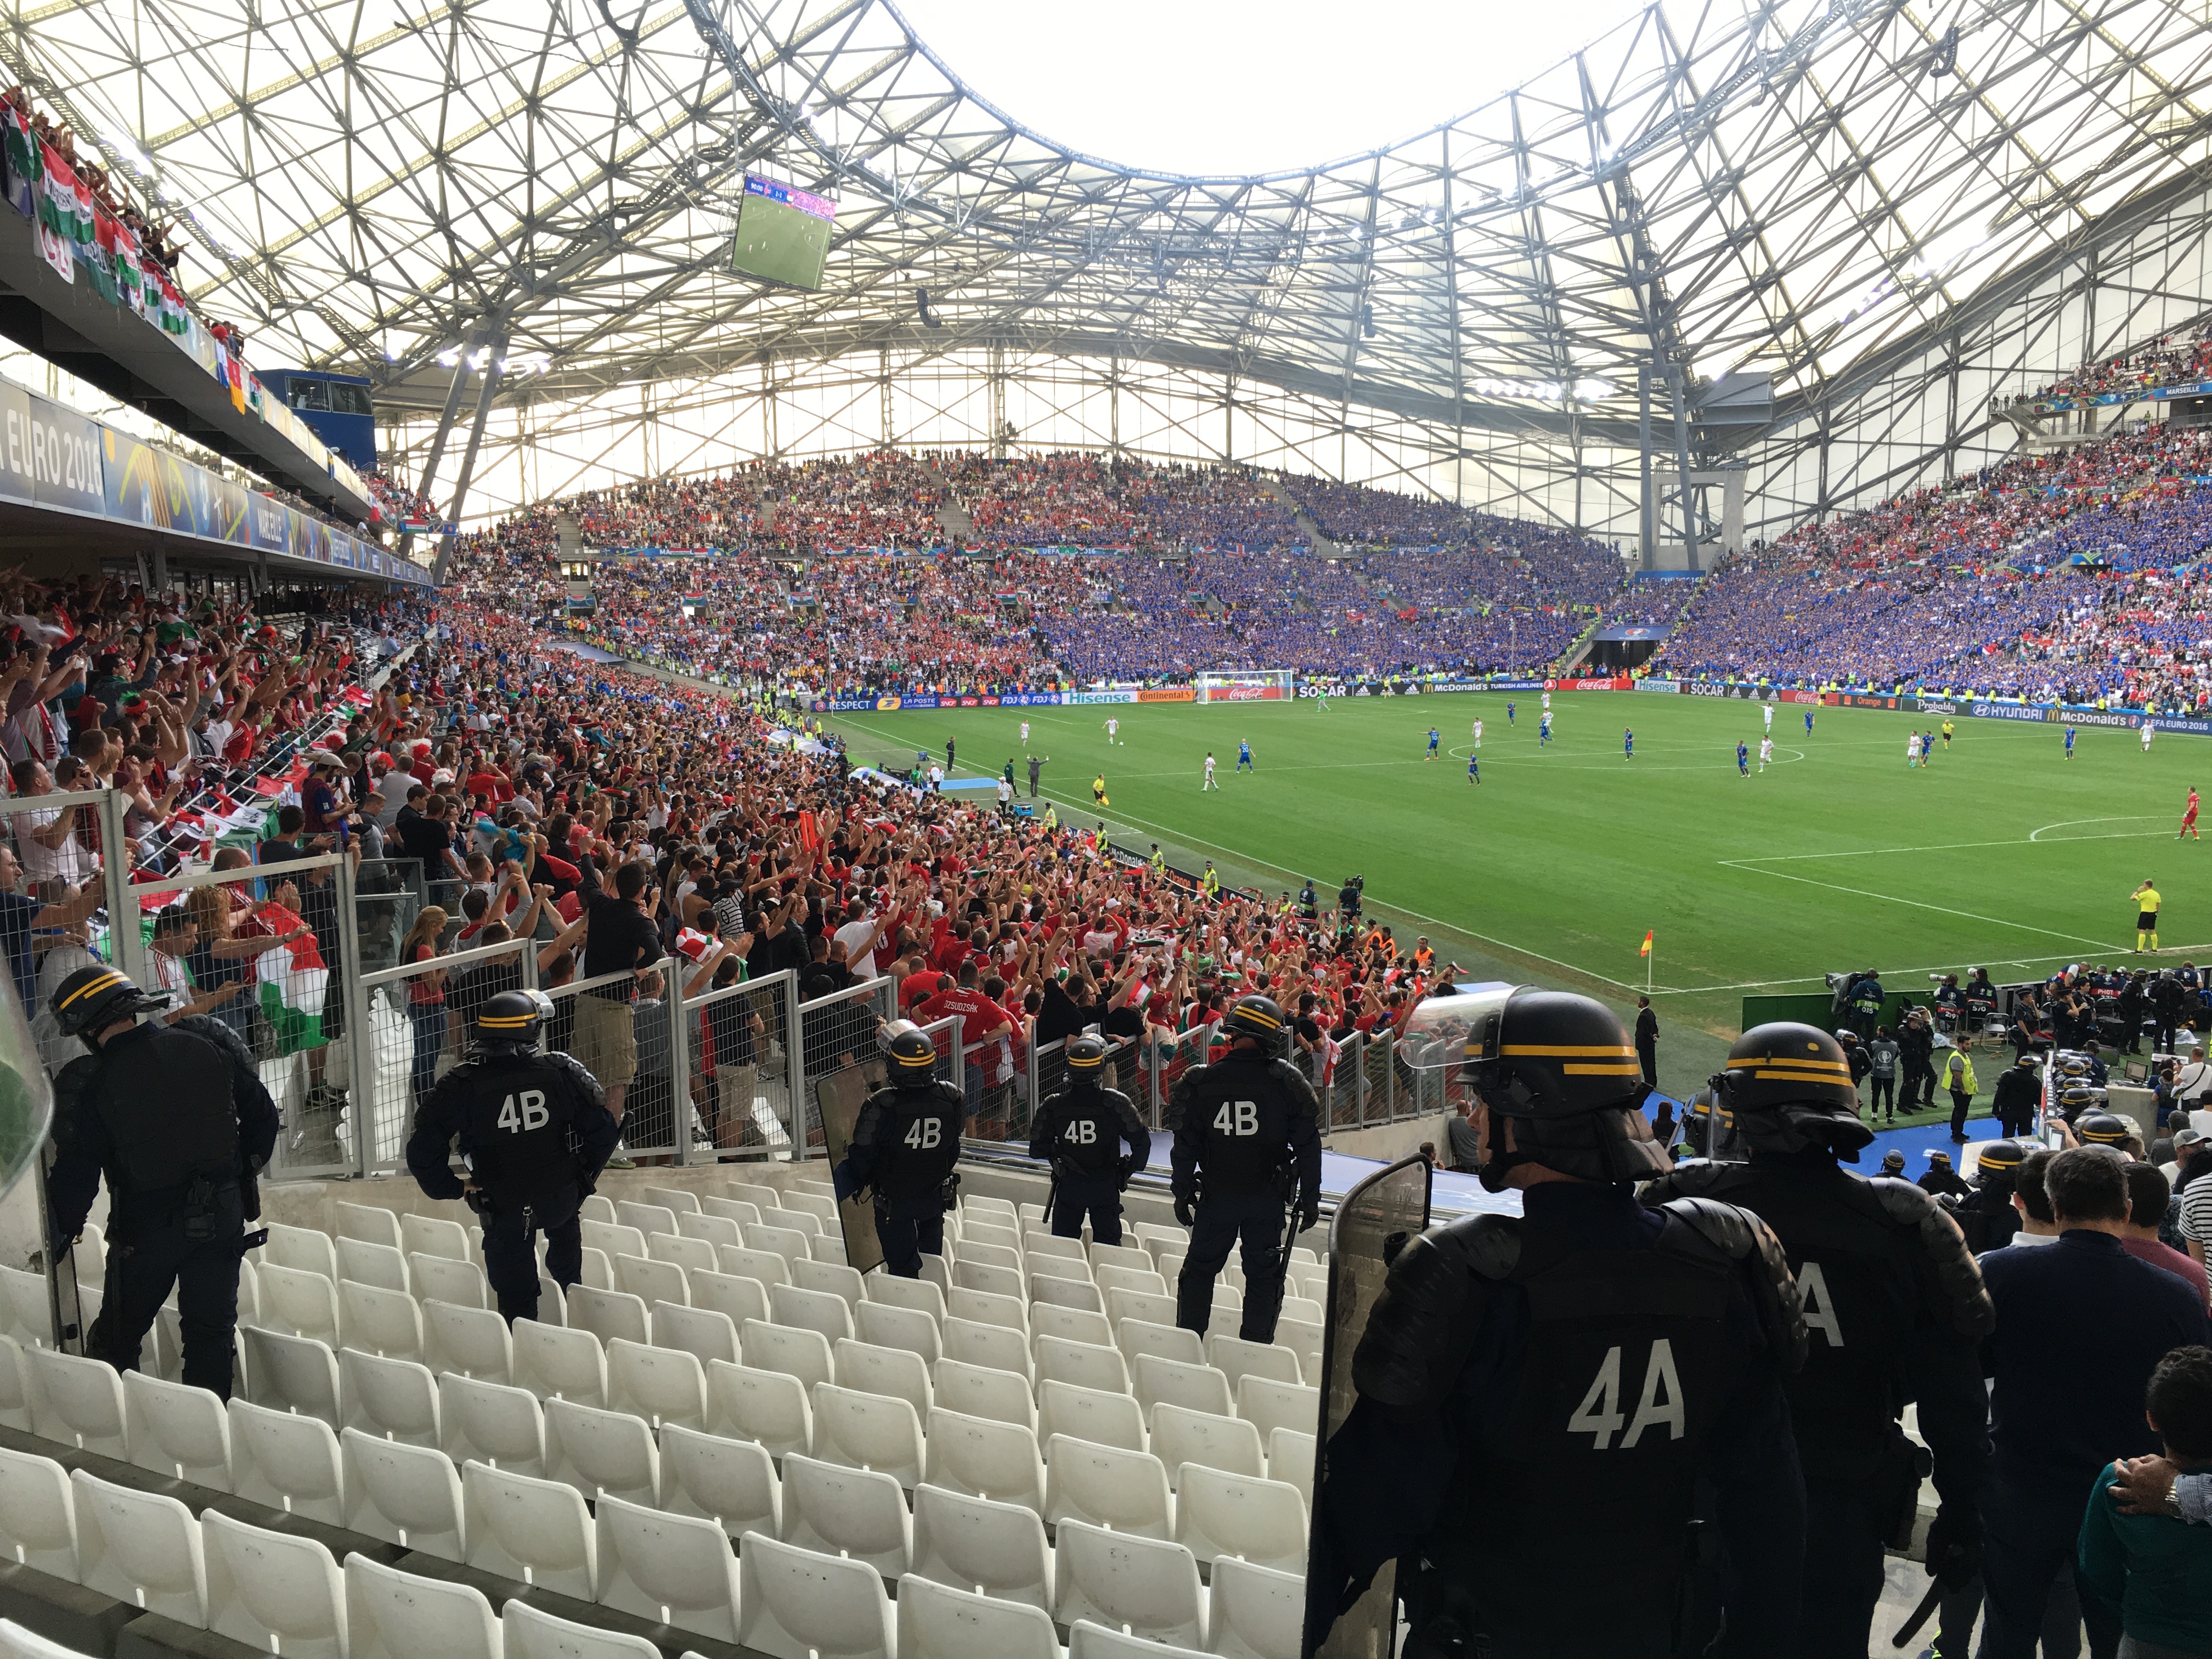 The Stade Velodrome in Marseille